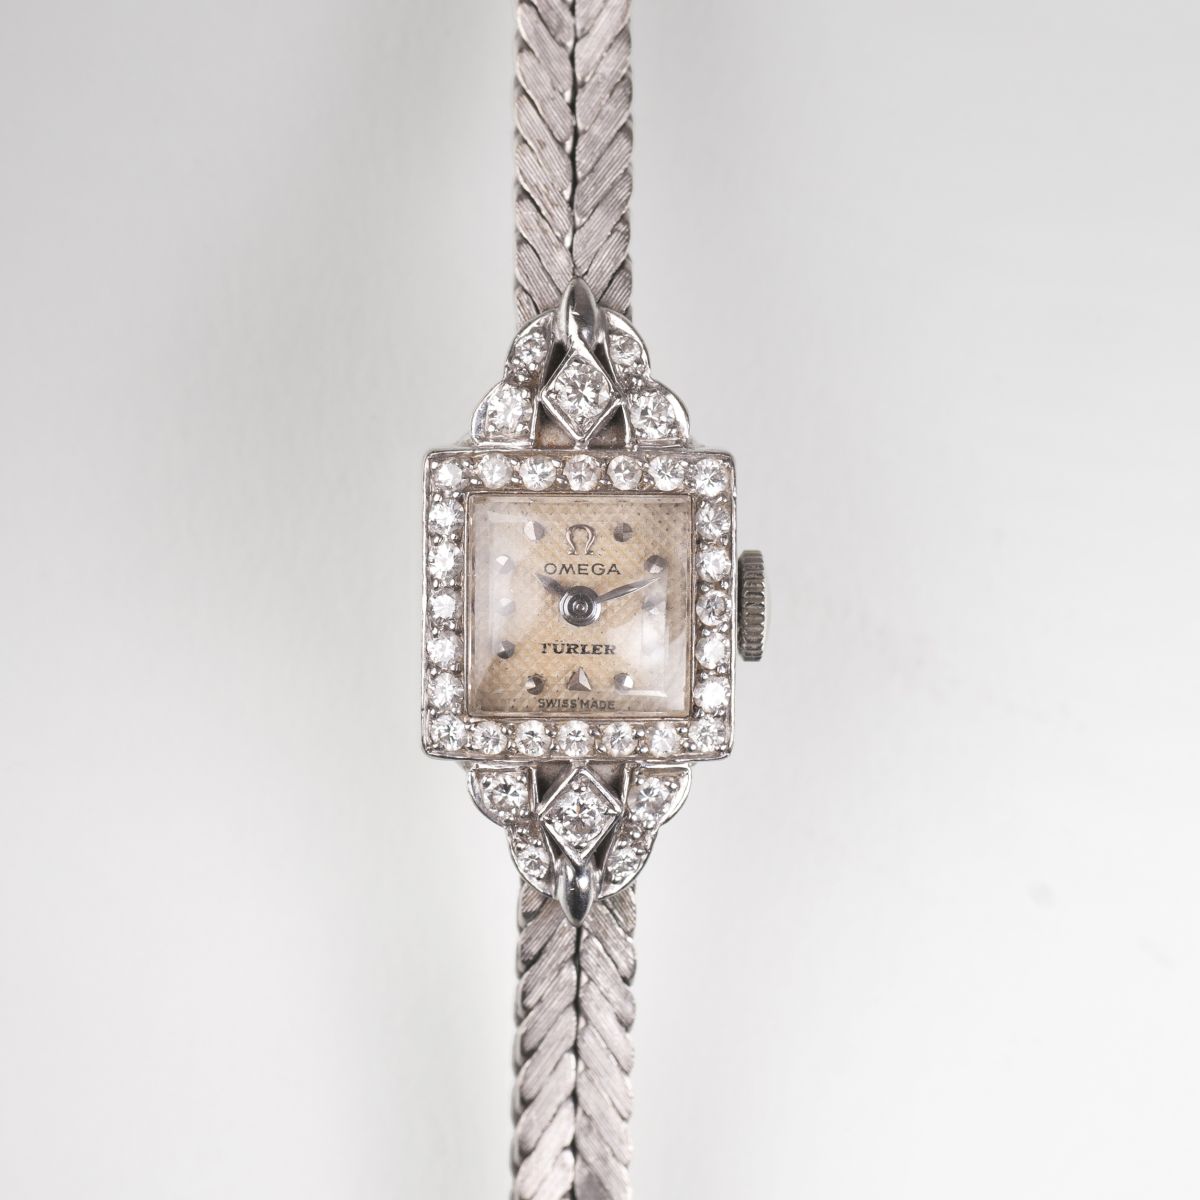 A Vintage ladie's watch with diamonds by Türler